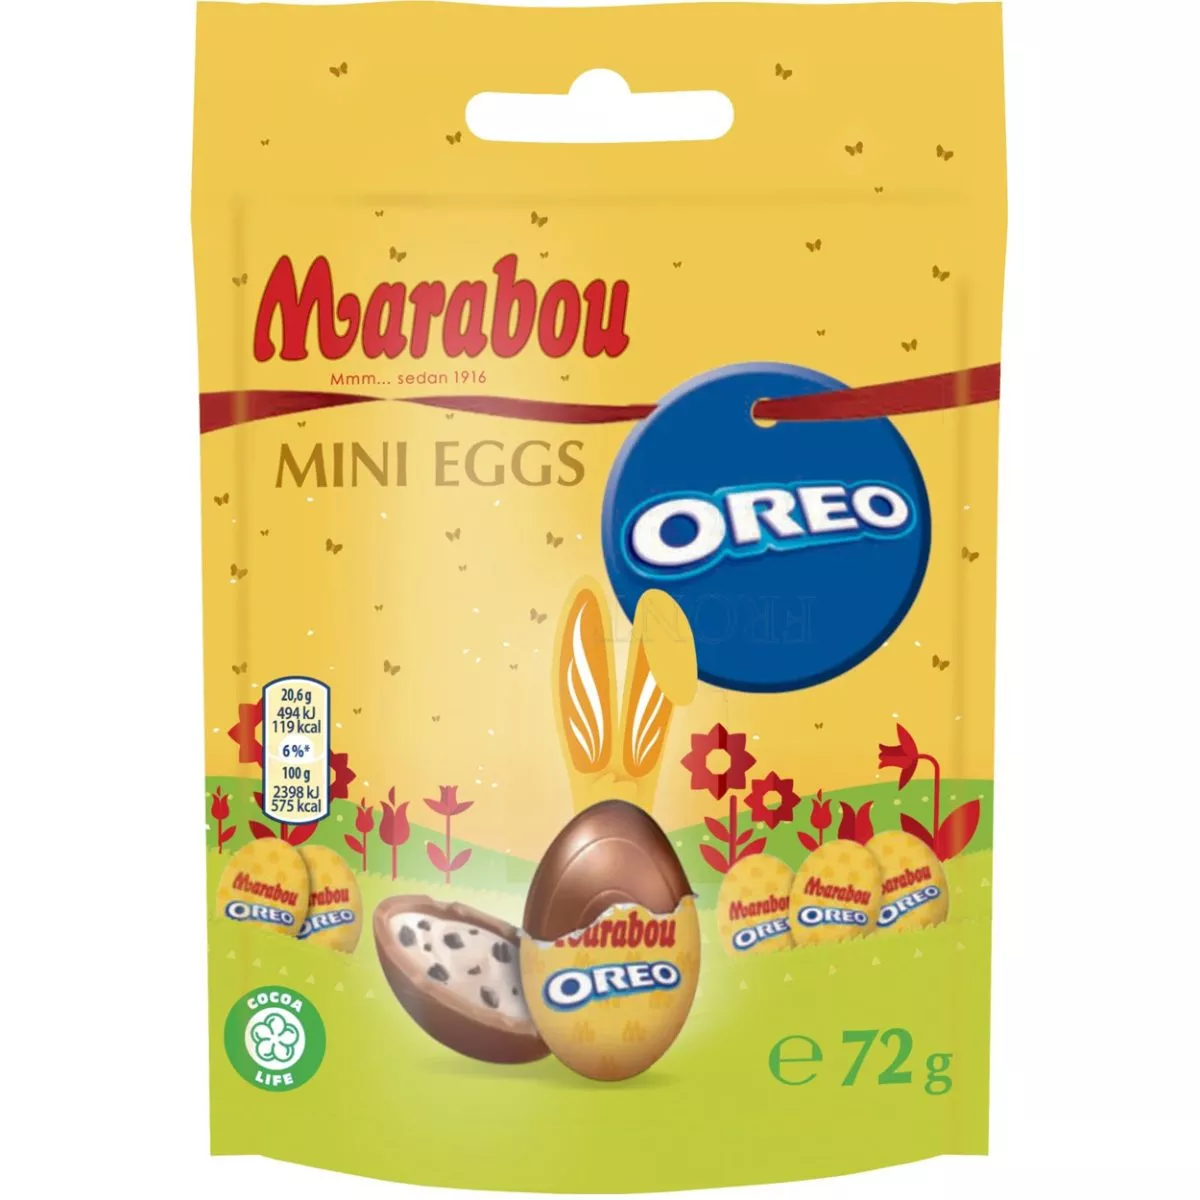 Marabou Mini Eggs Oreo (72g) 1